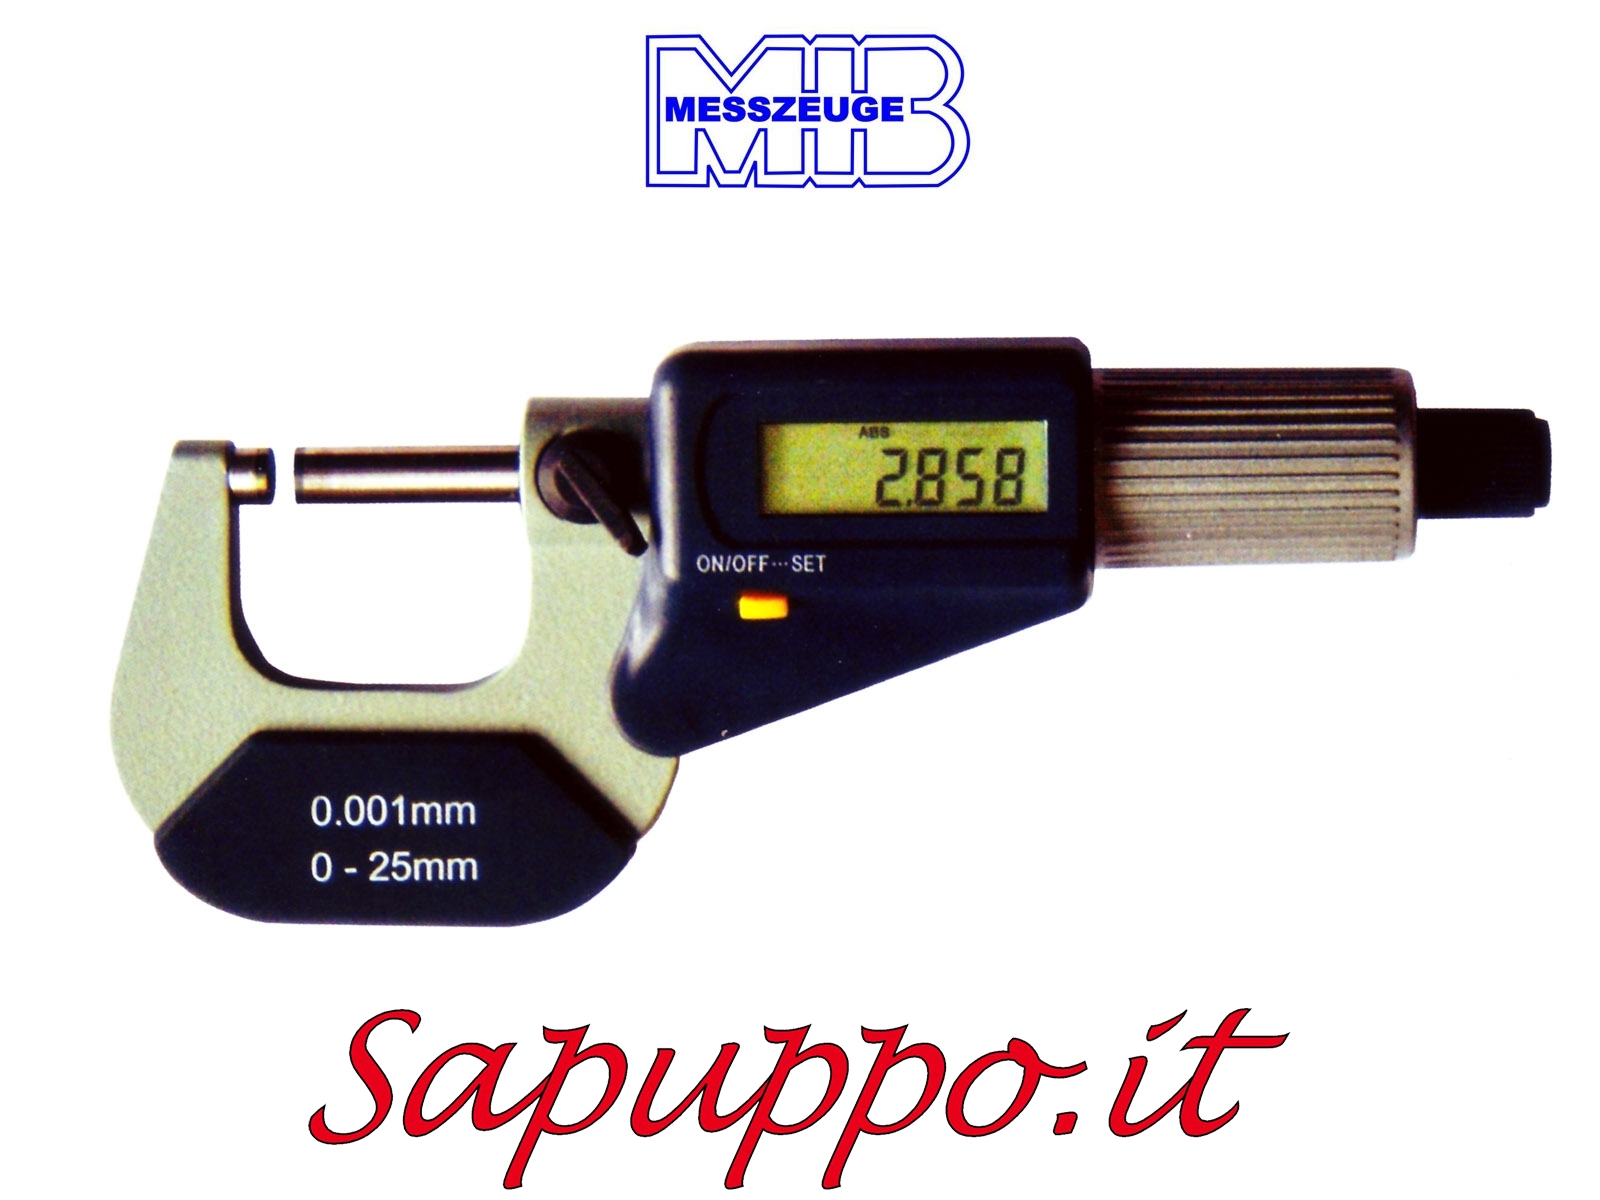 Vendita online Micrometro digitale DIN 863 MIB 6026